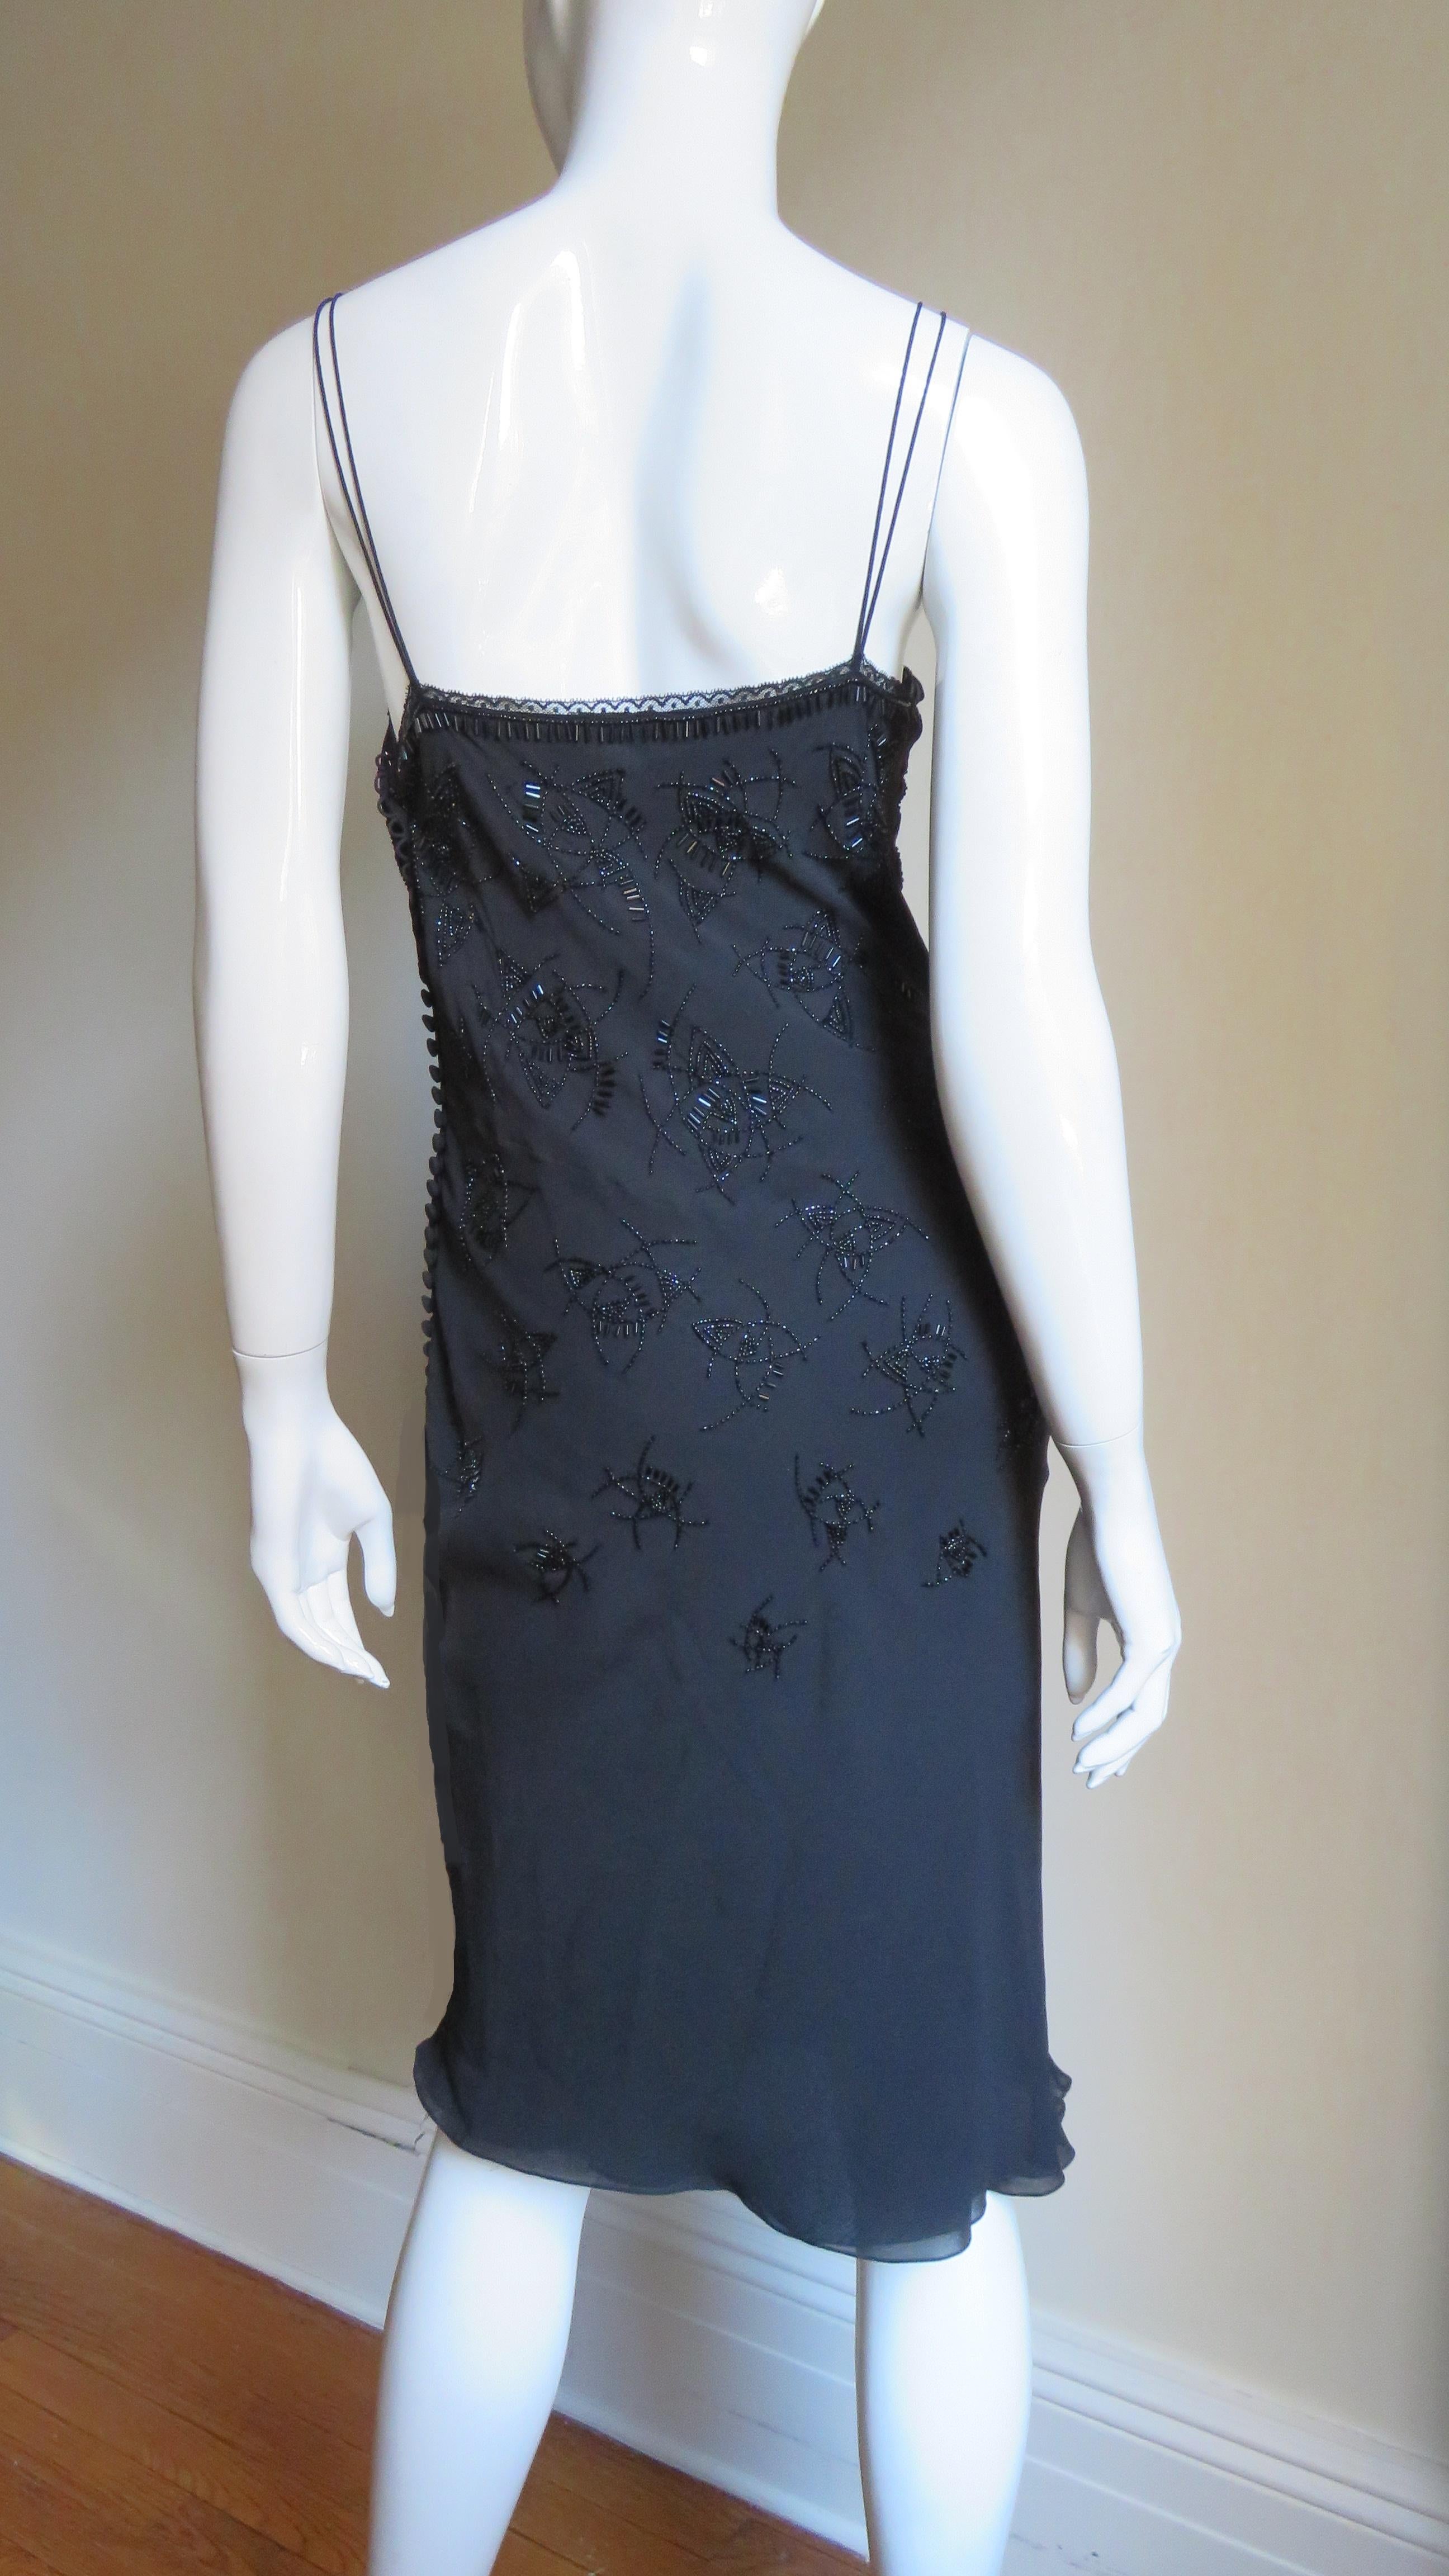  John Galliano for Christian Dior Silk Slip Dress 2